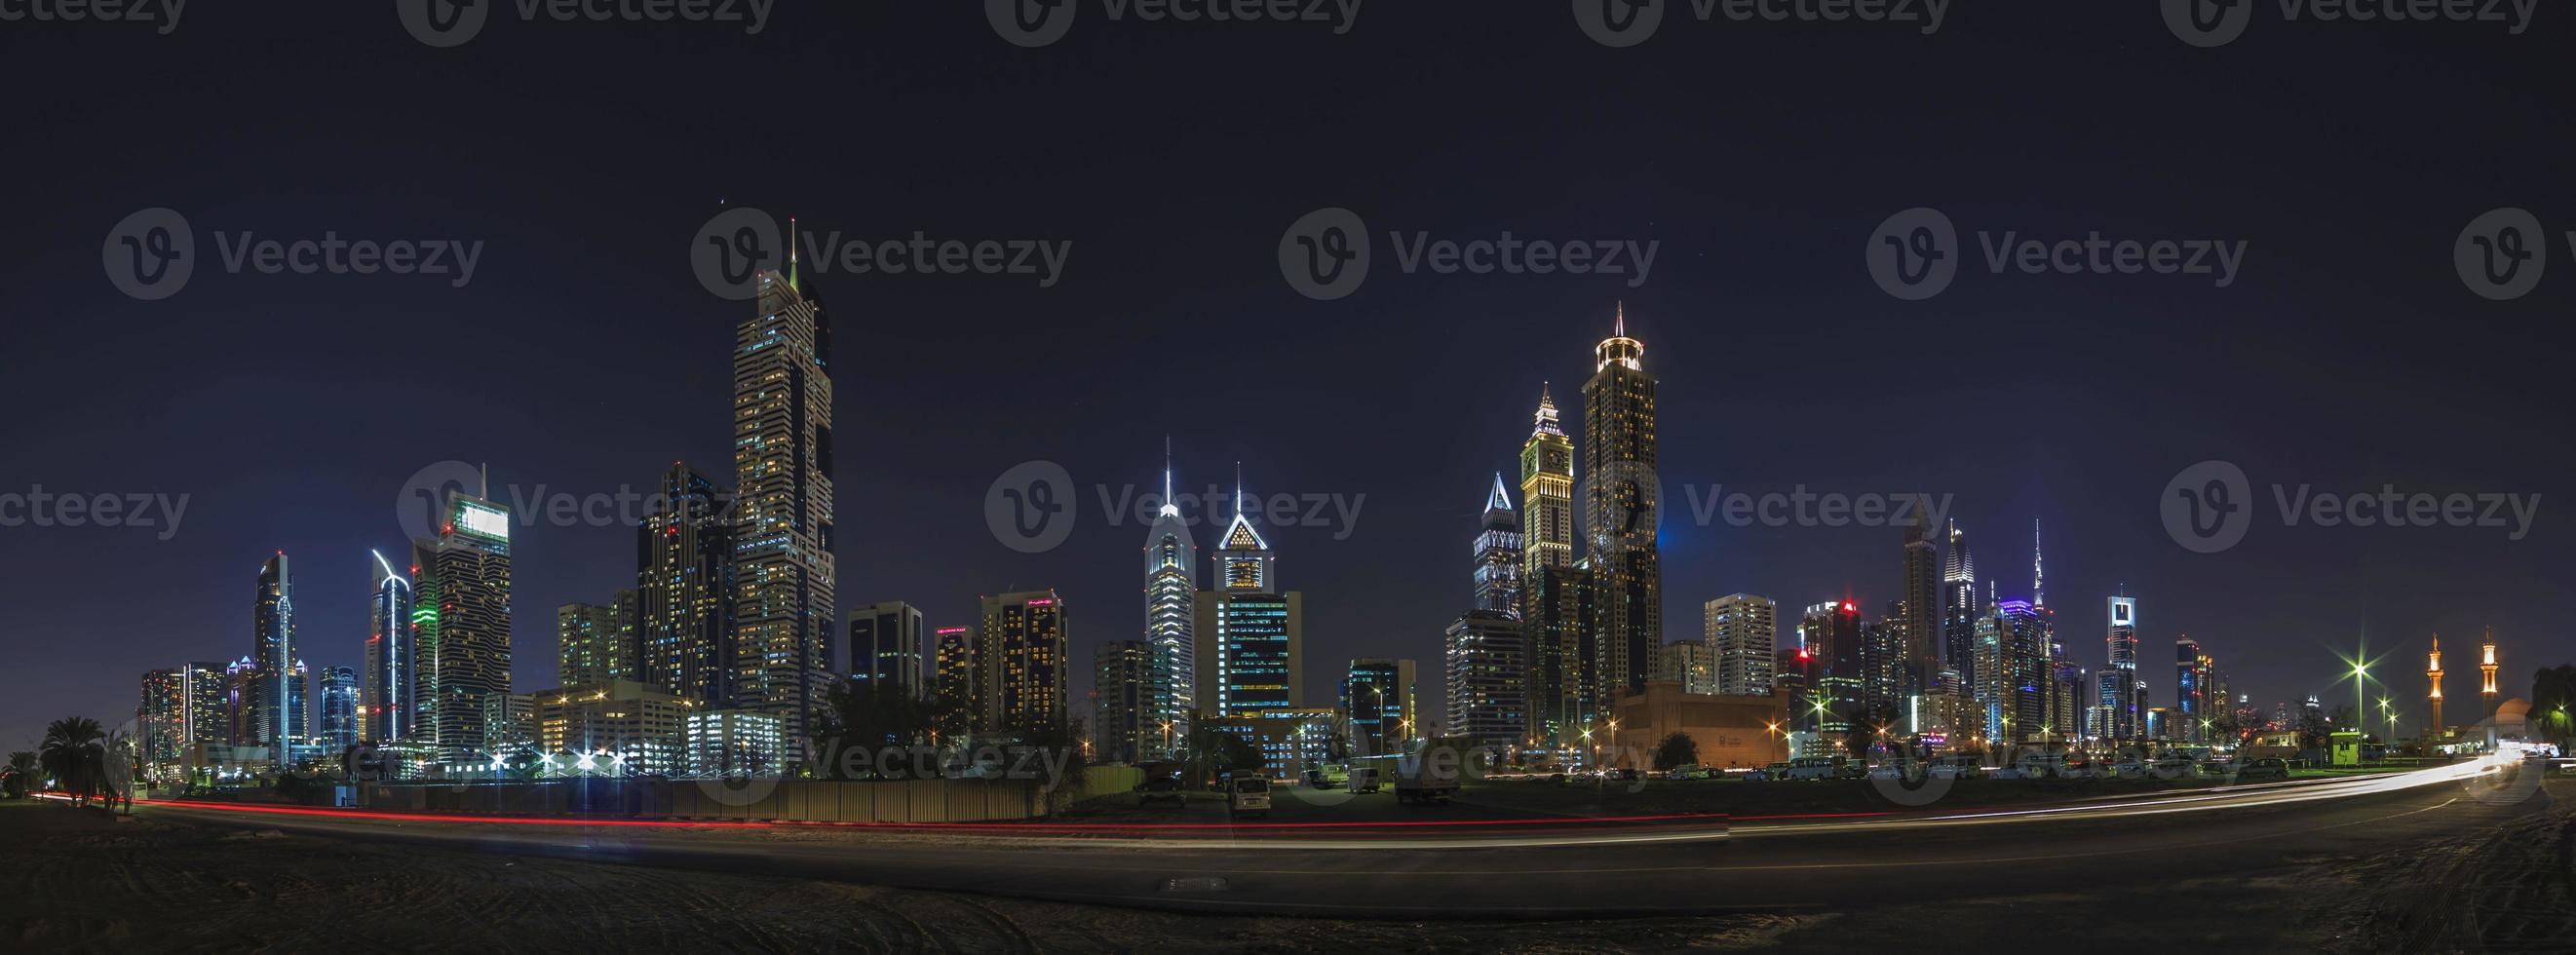 panorama- bild av dubai på natt foto